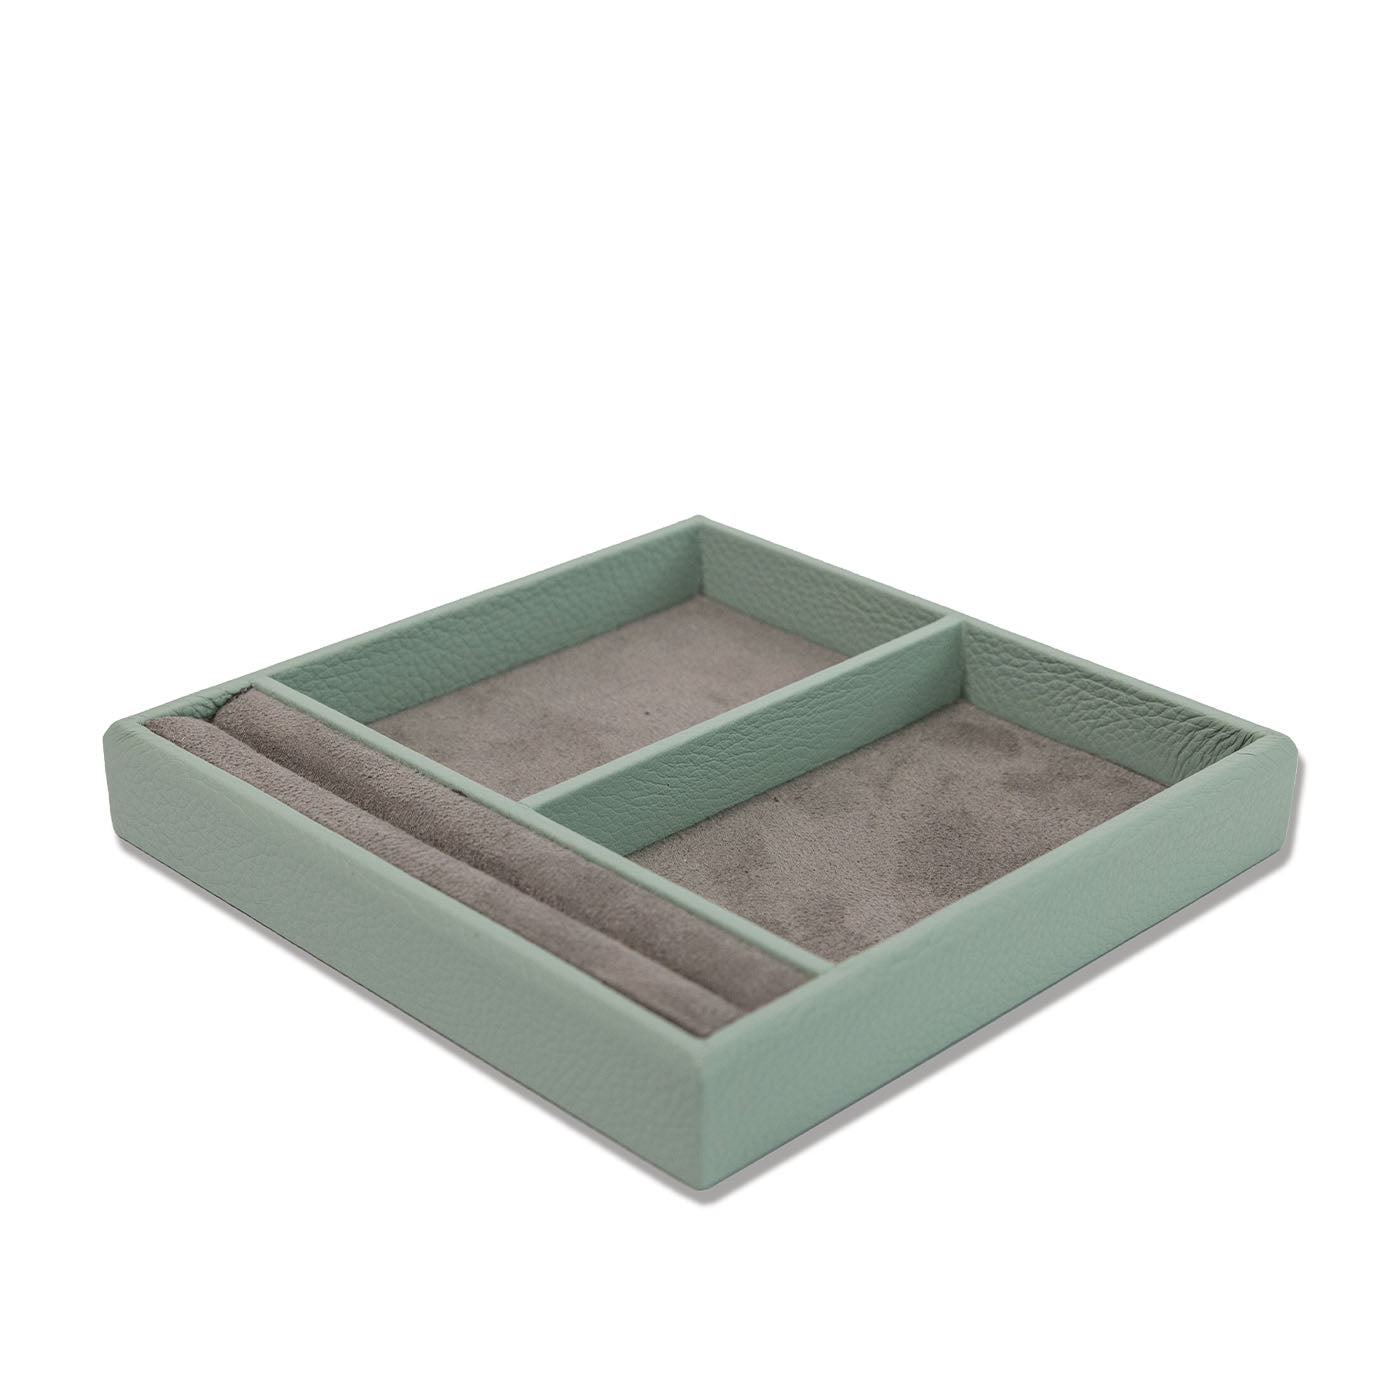 Safety Box Smeralda Green Small Tray (petit plateau)  - Vue alternative 1